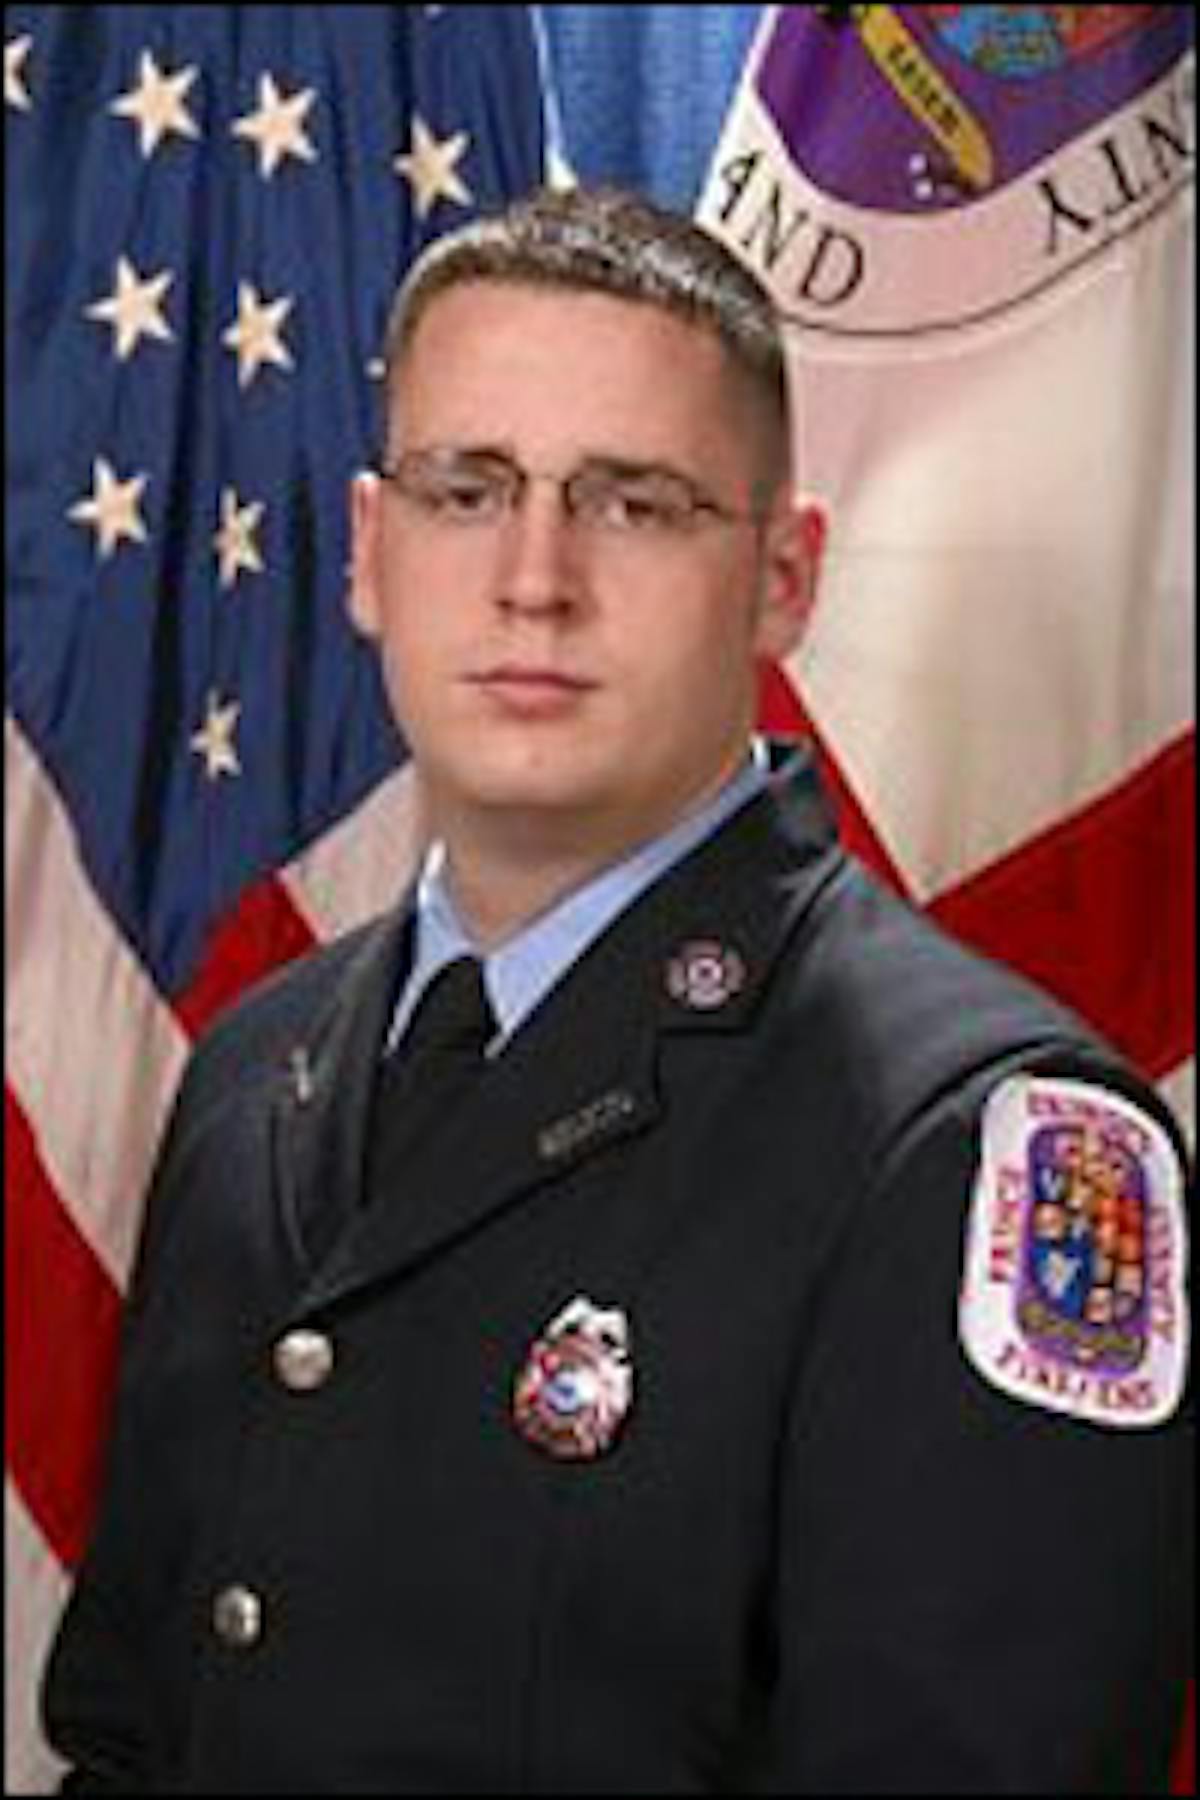 Firefighter/Paramedic Daniel McGown